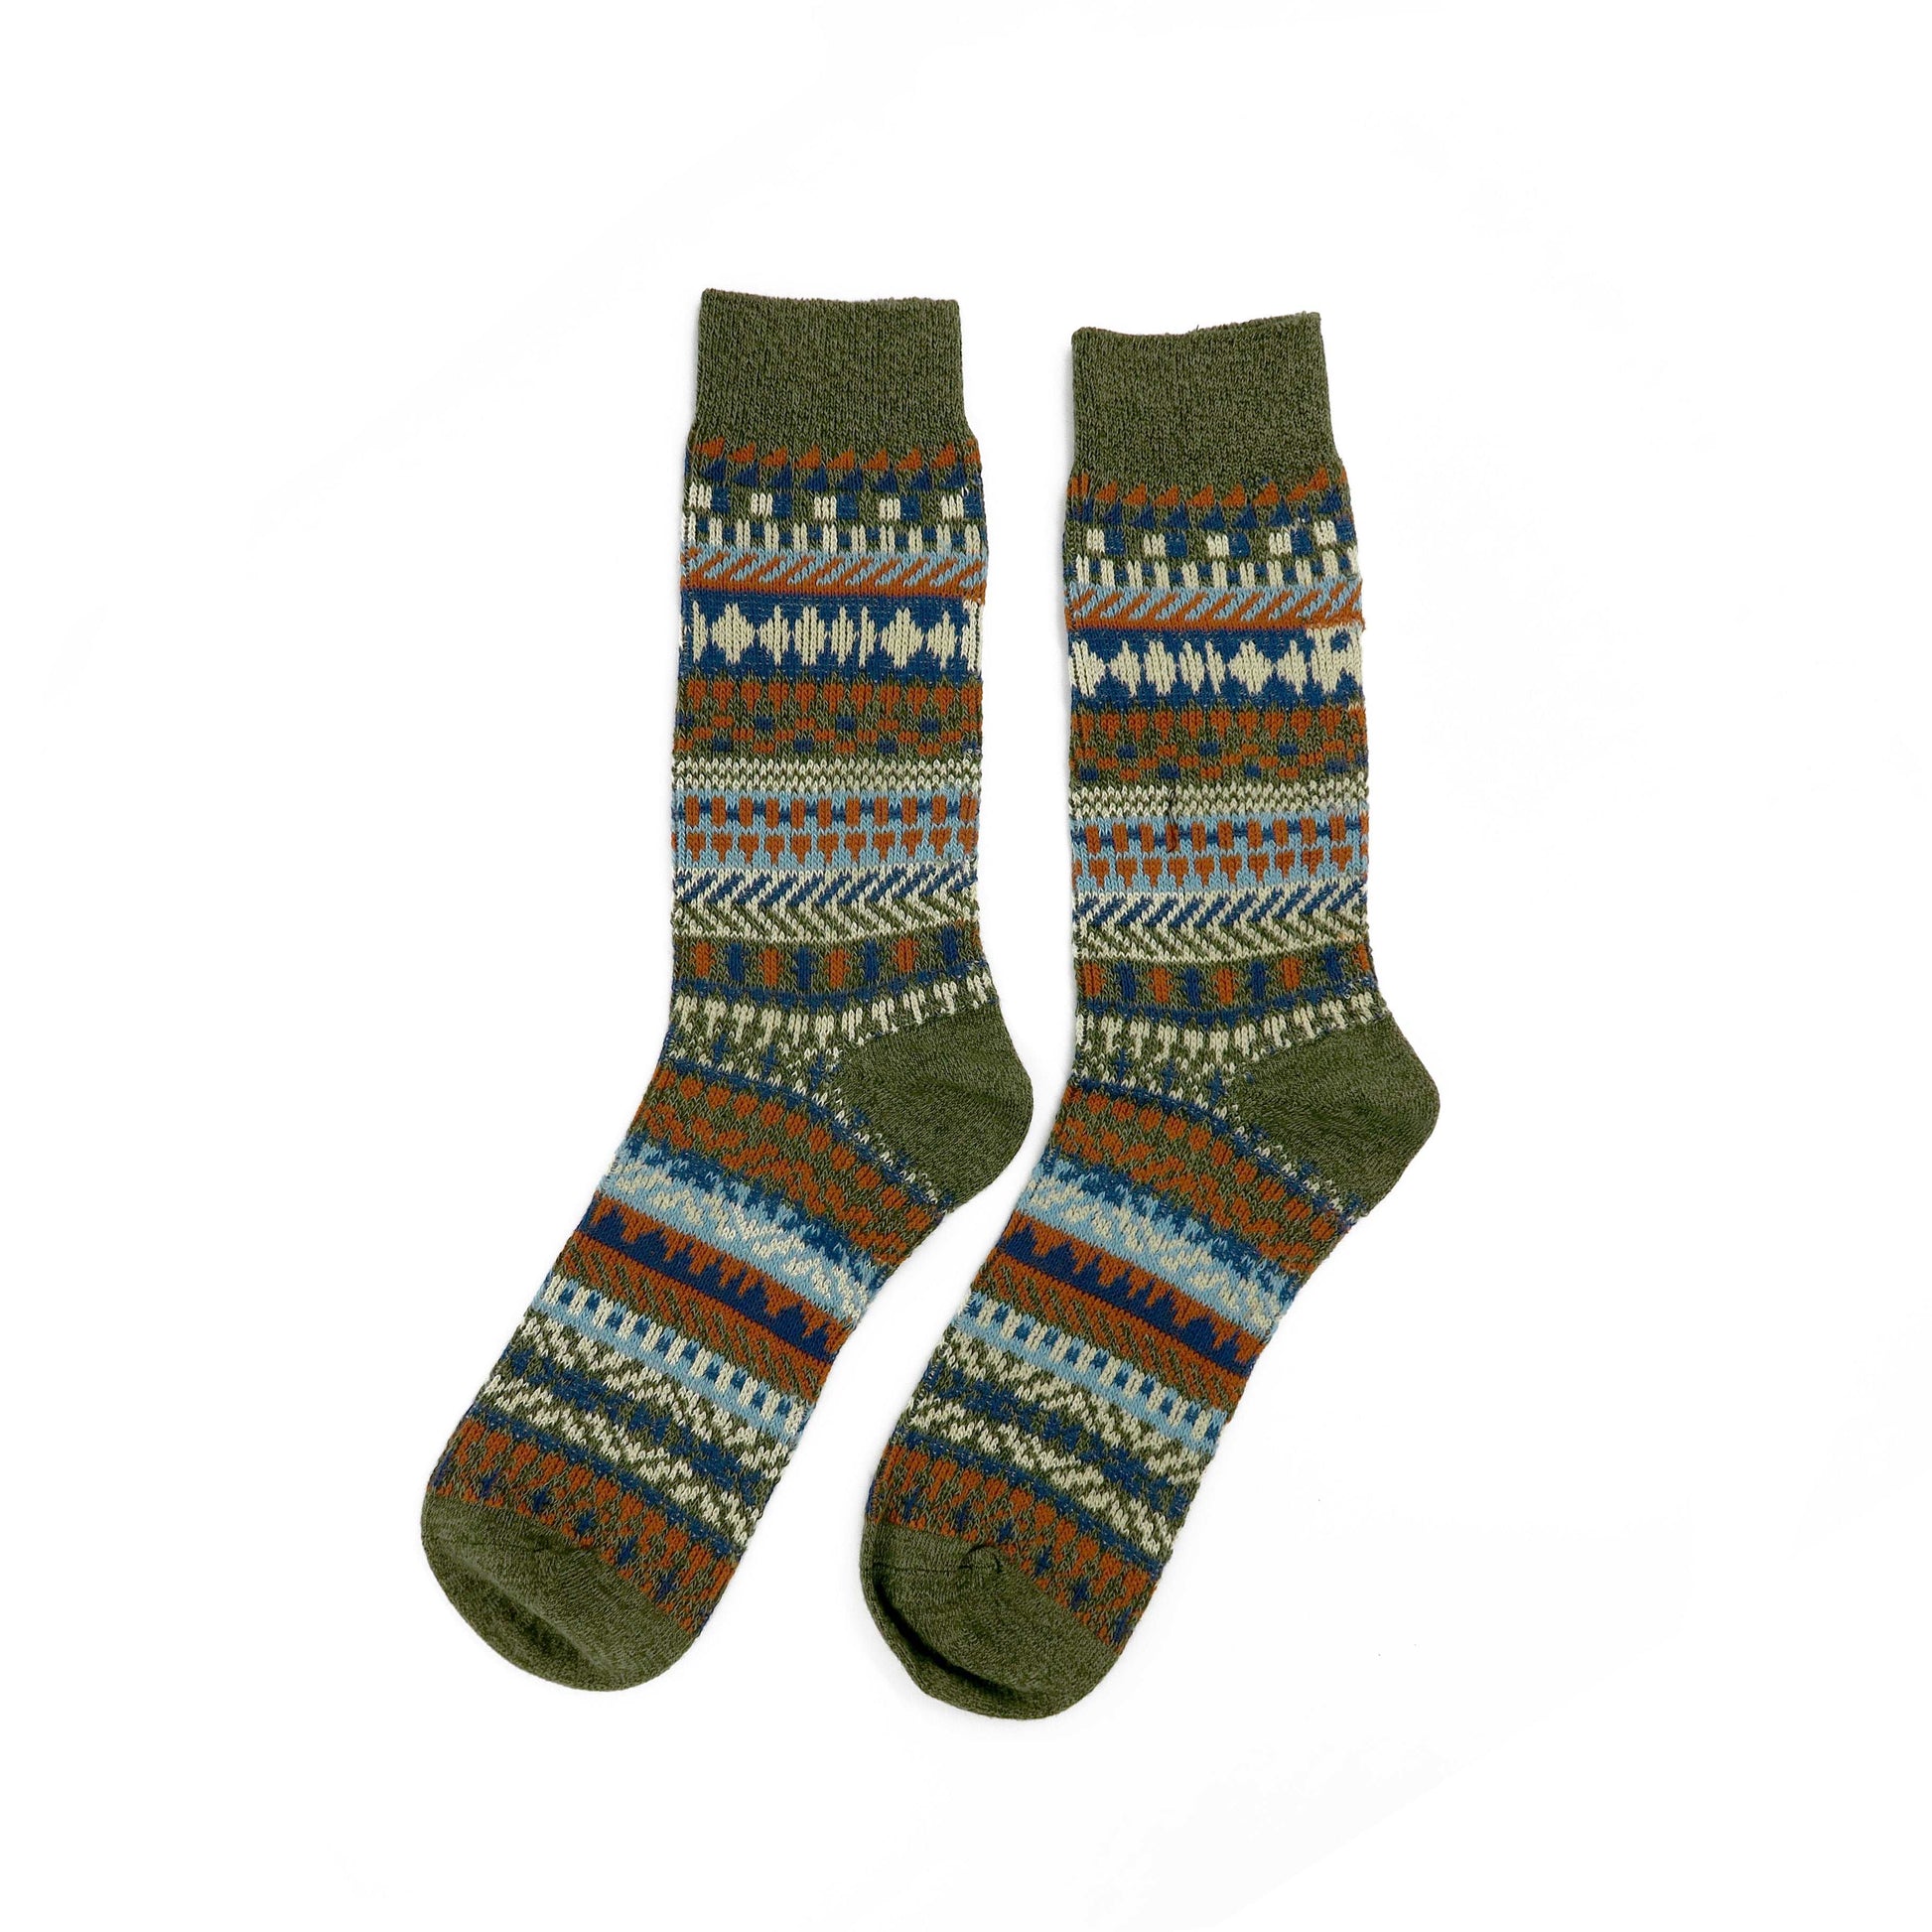 kizune socks - green tribal patterm socks - comfysocks